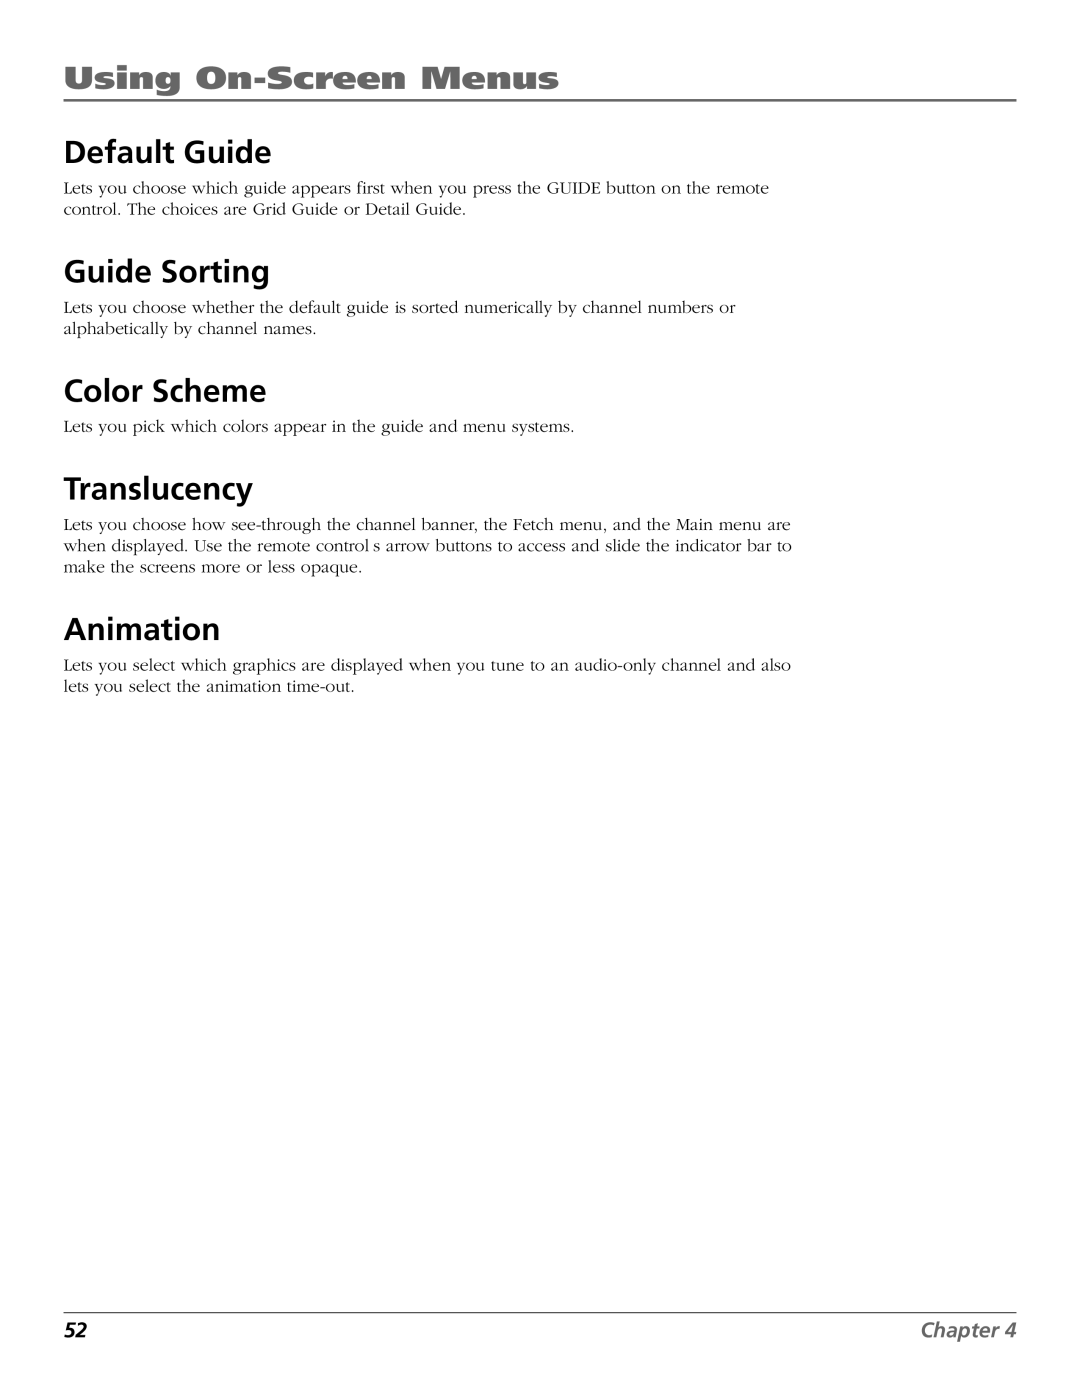 RCA Satellite TV System manual Default Guide, Guide Sorting, Color Scheme, Translucency, Animation 